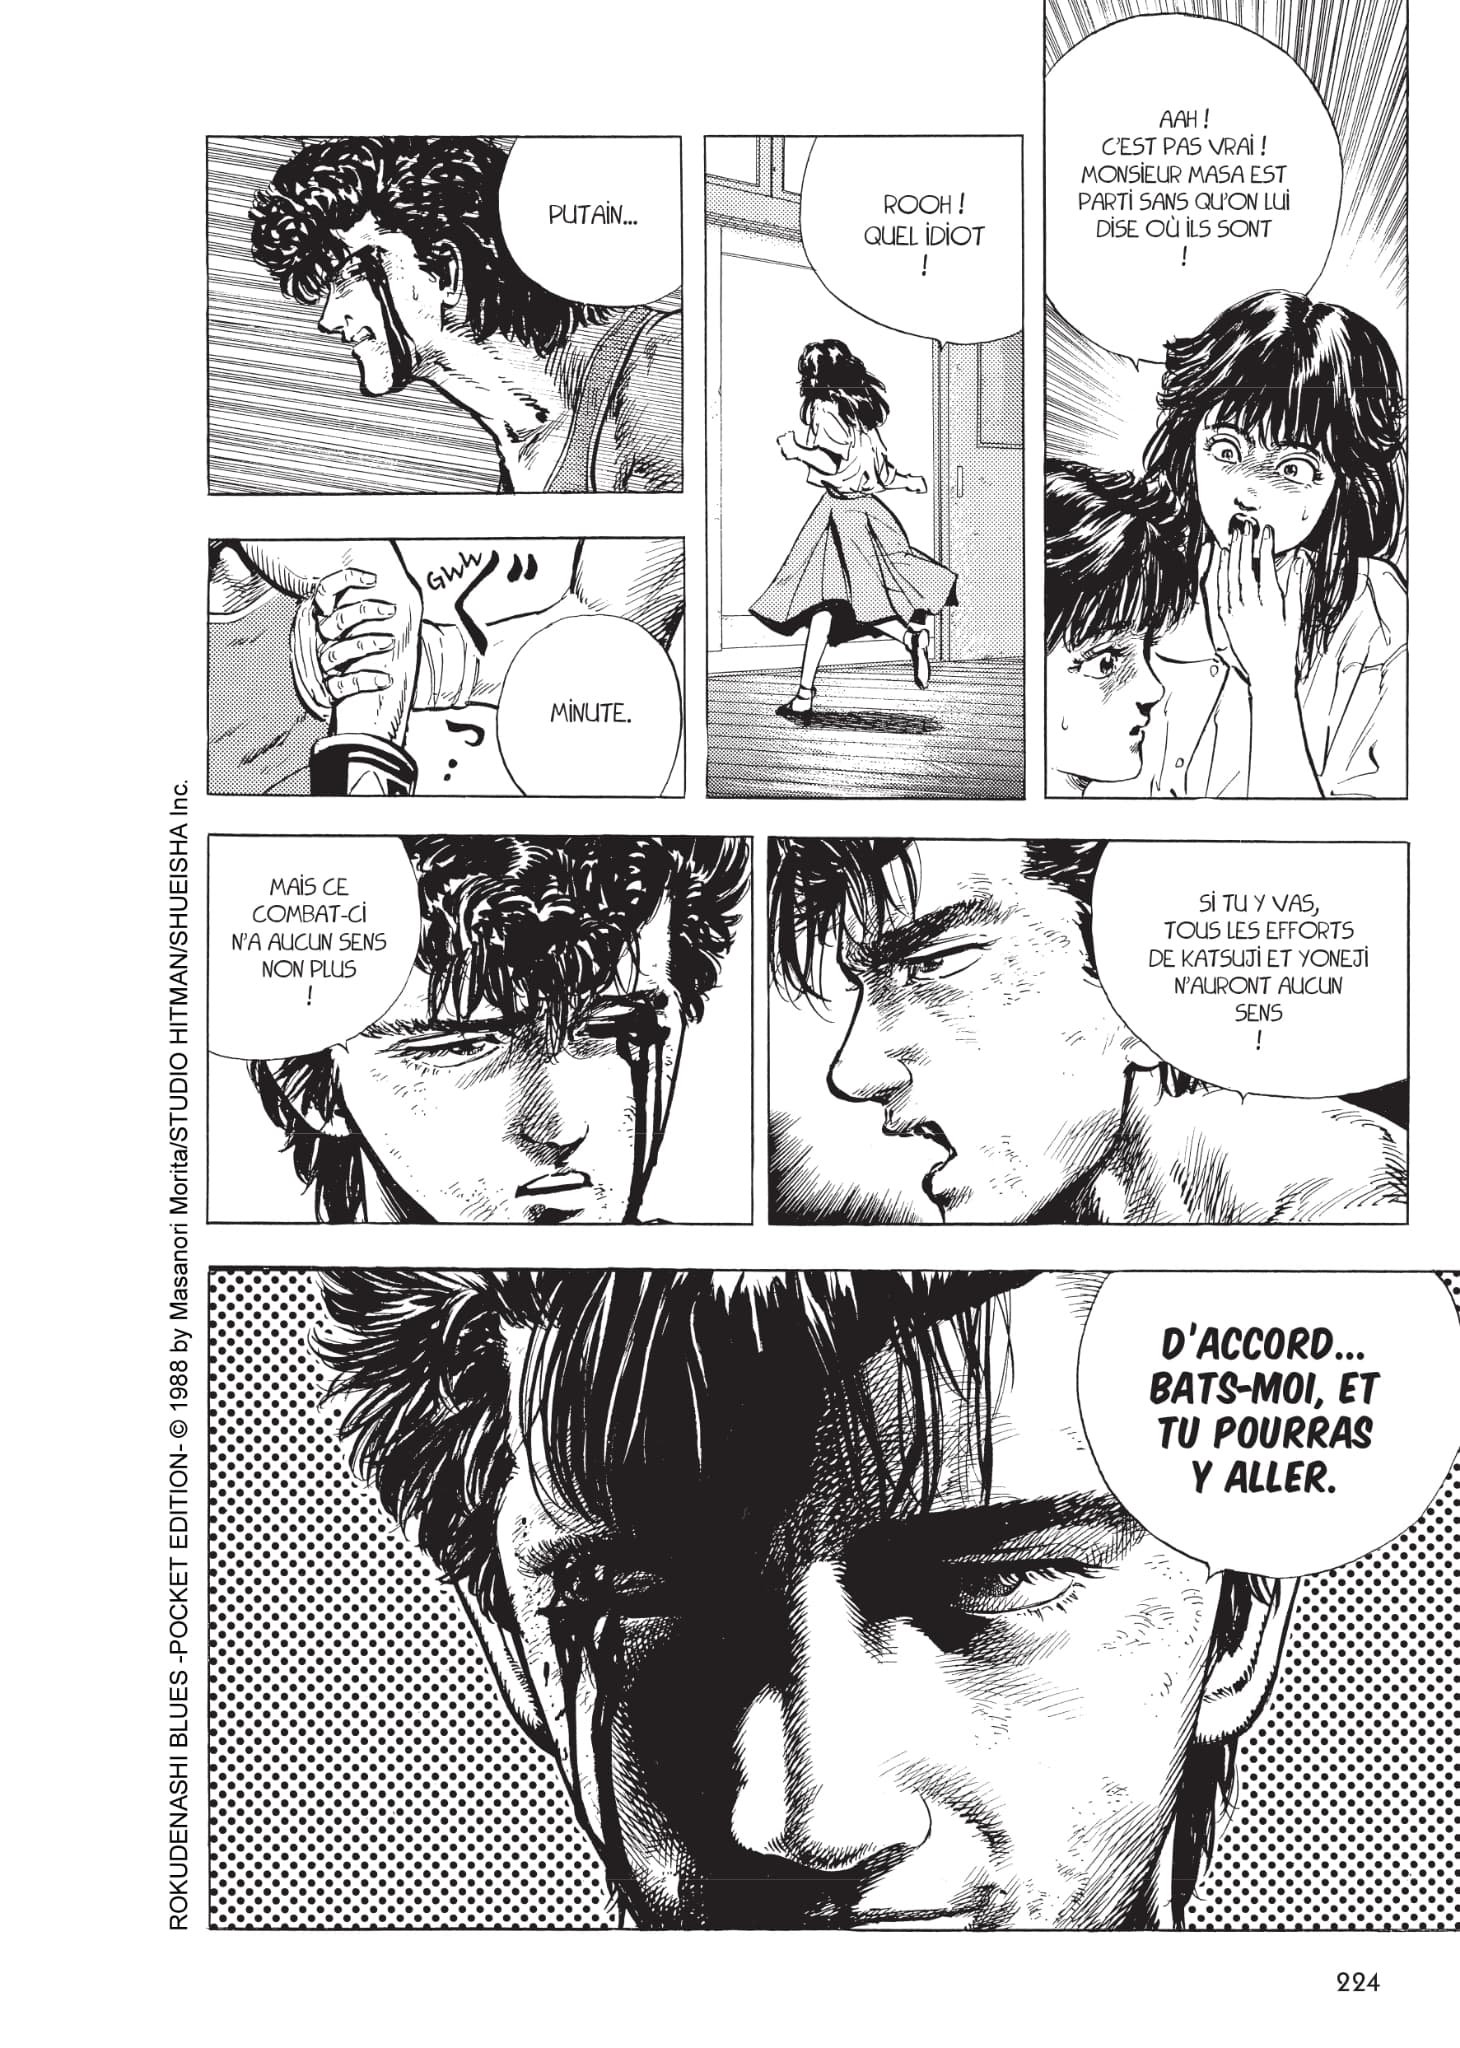 Rokudenashi Blues (Manga) en VF